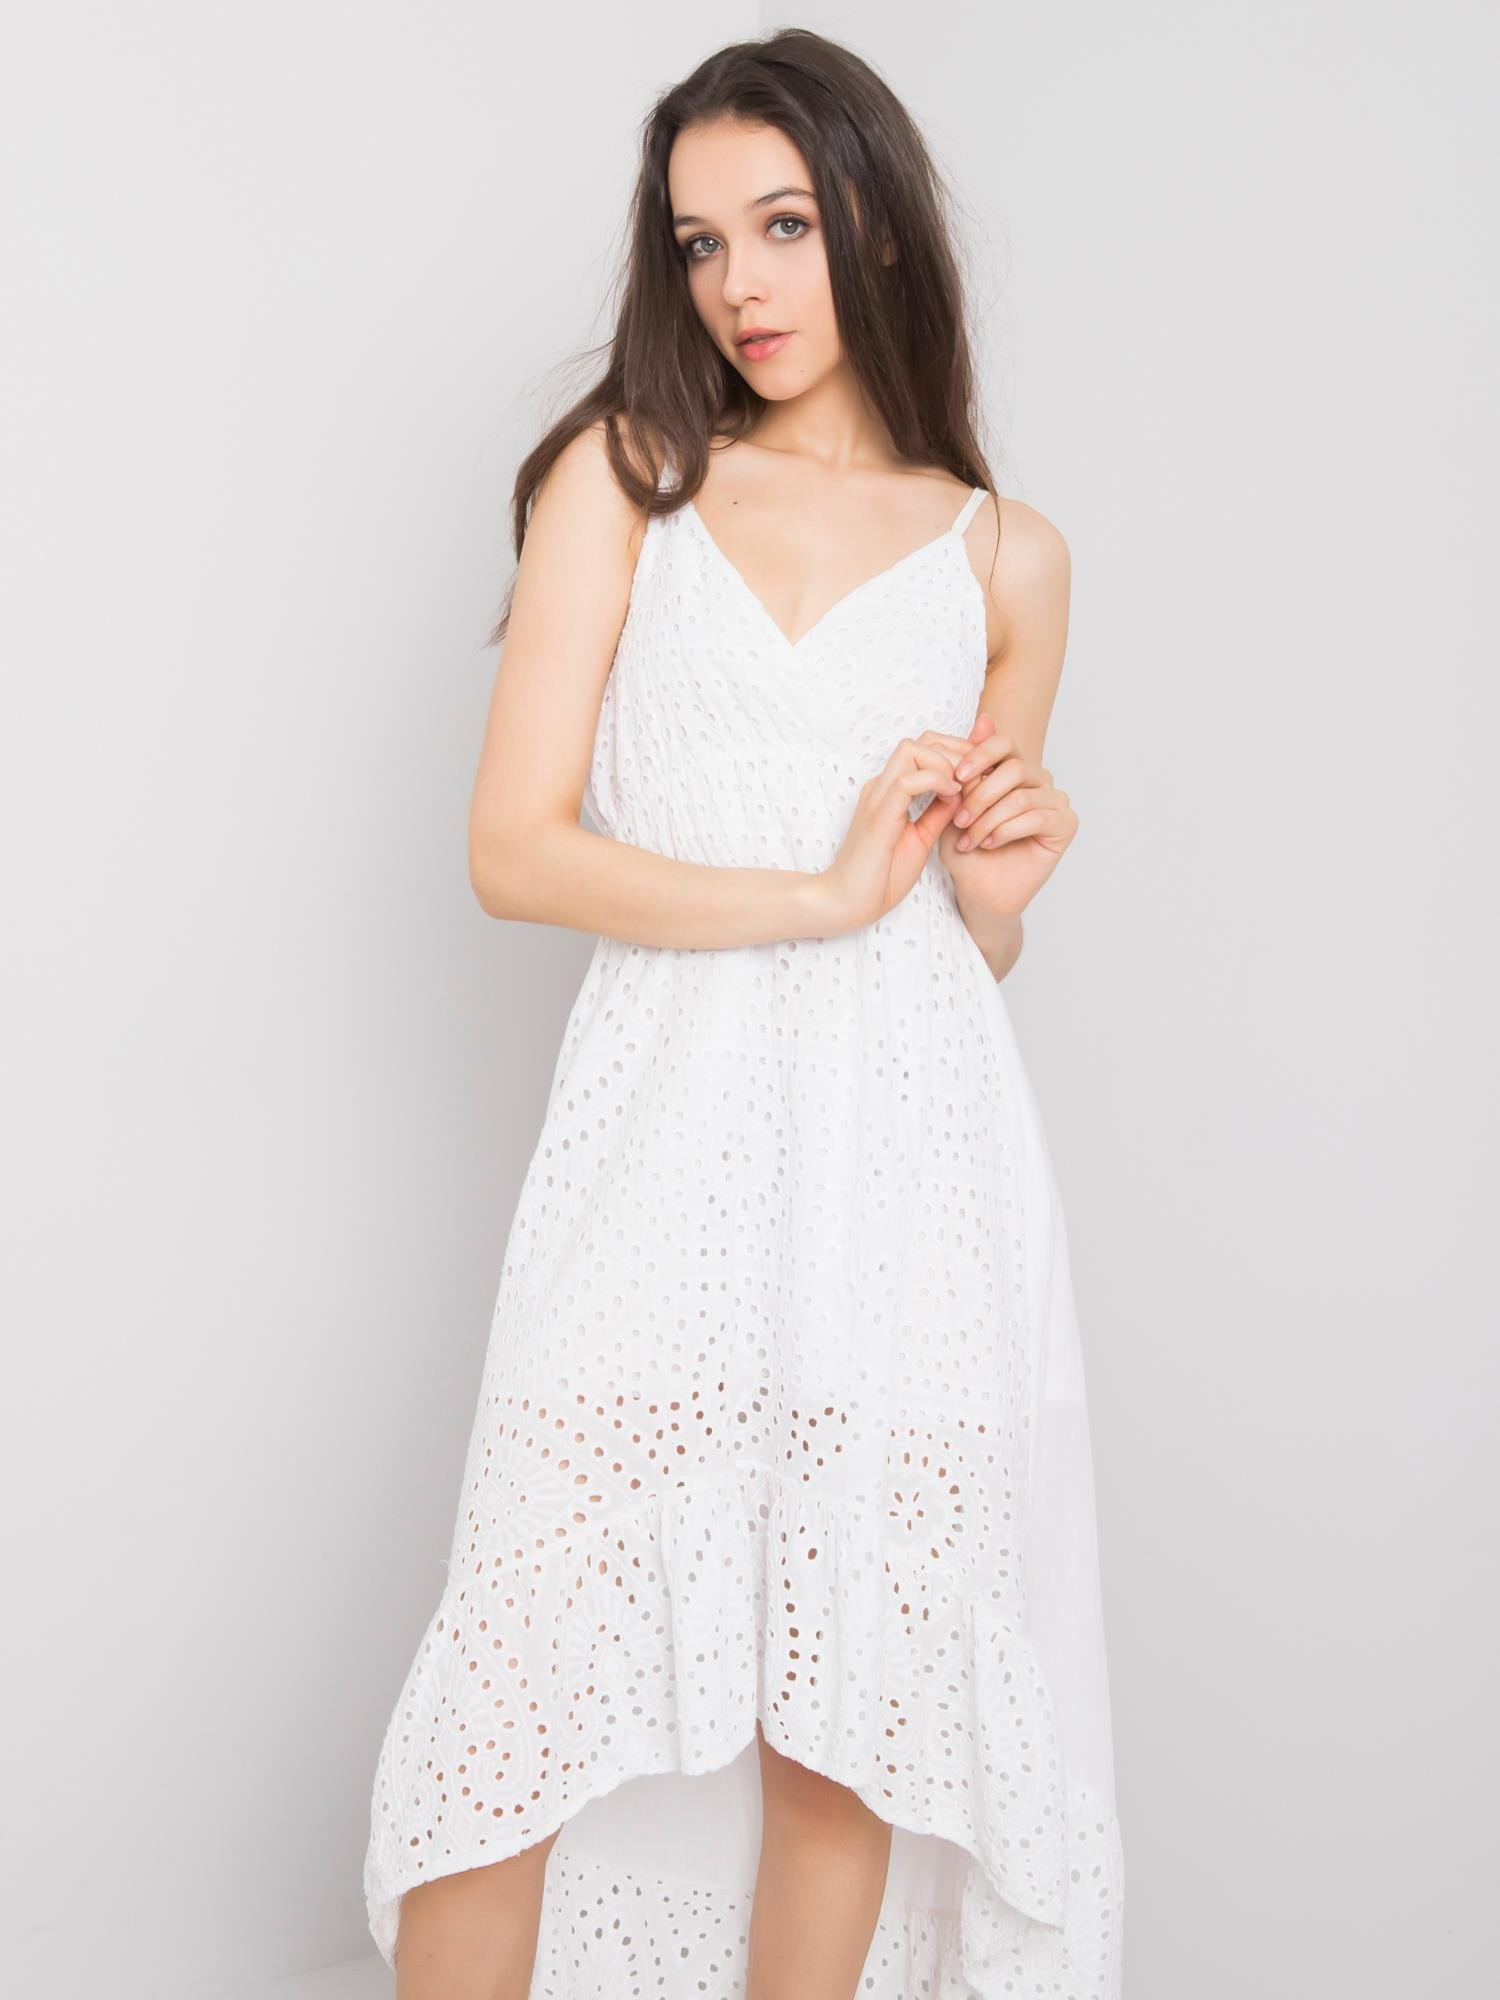 Dámské šaty TW SK BI model 18559789 bílá OH BELLA bílá M - FPrice